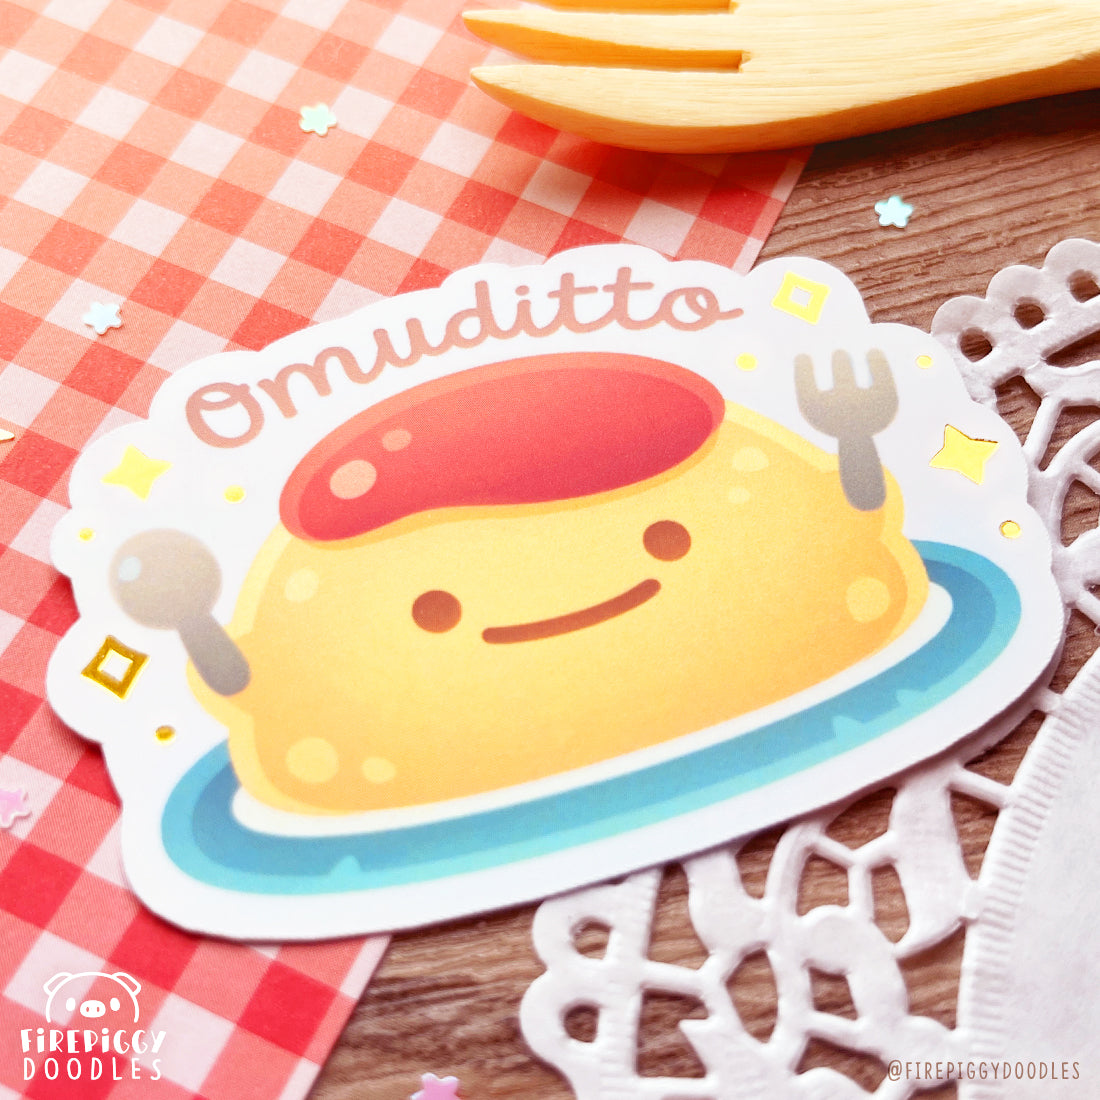 Omuditto Gold Foil Sticker